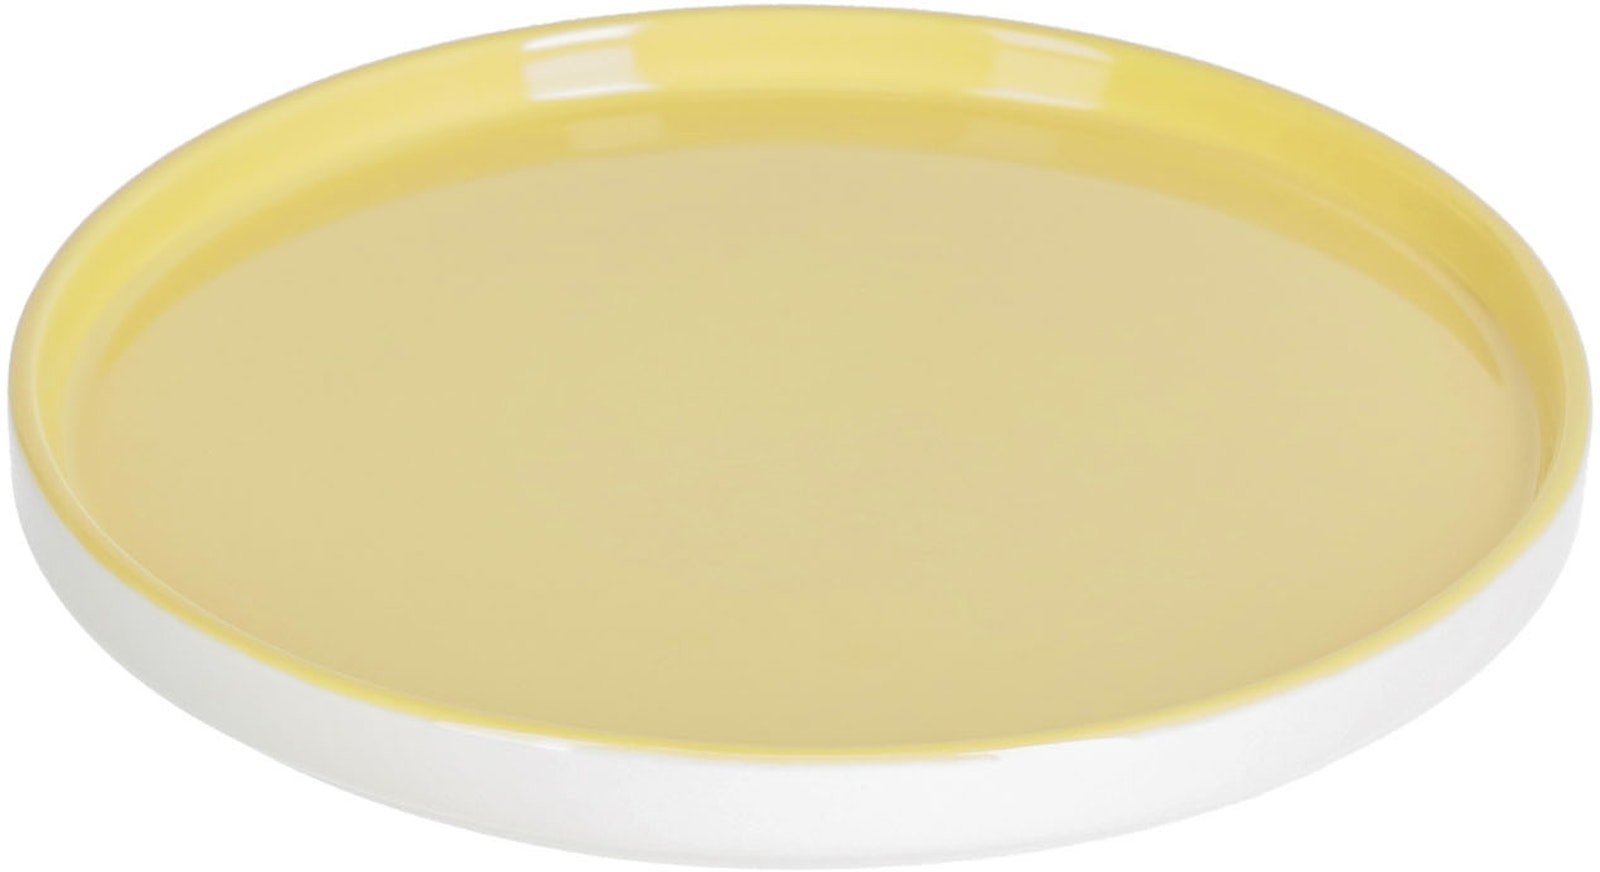 LAFORMA Midori desserttallerken, rund - gul keramik (Ø20,5)